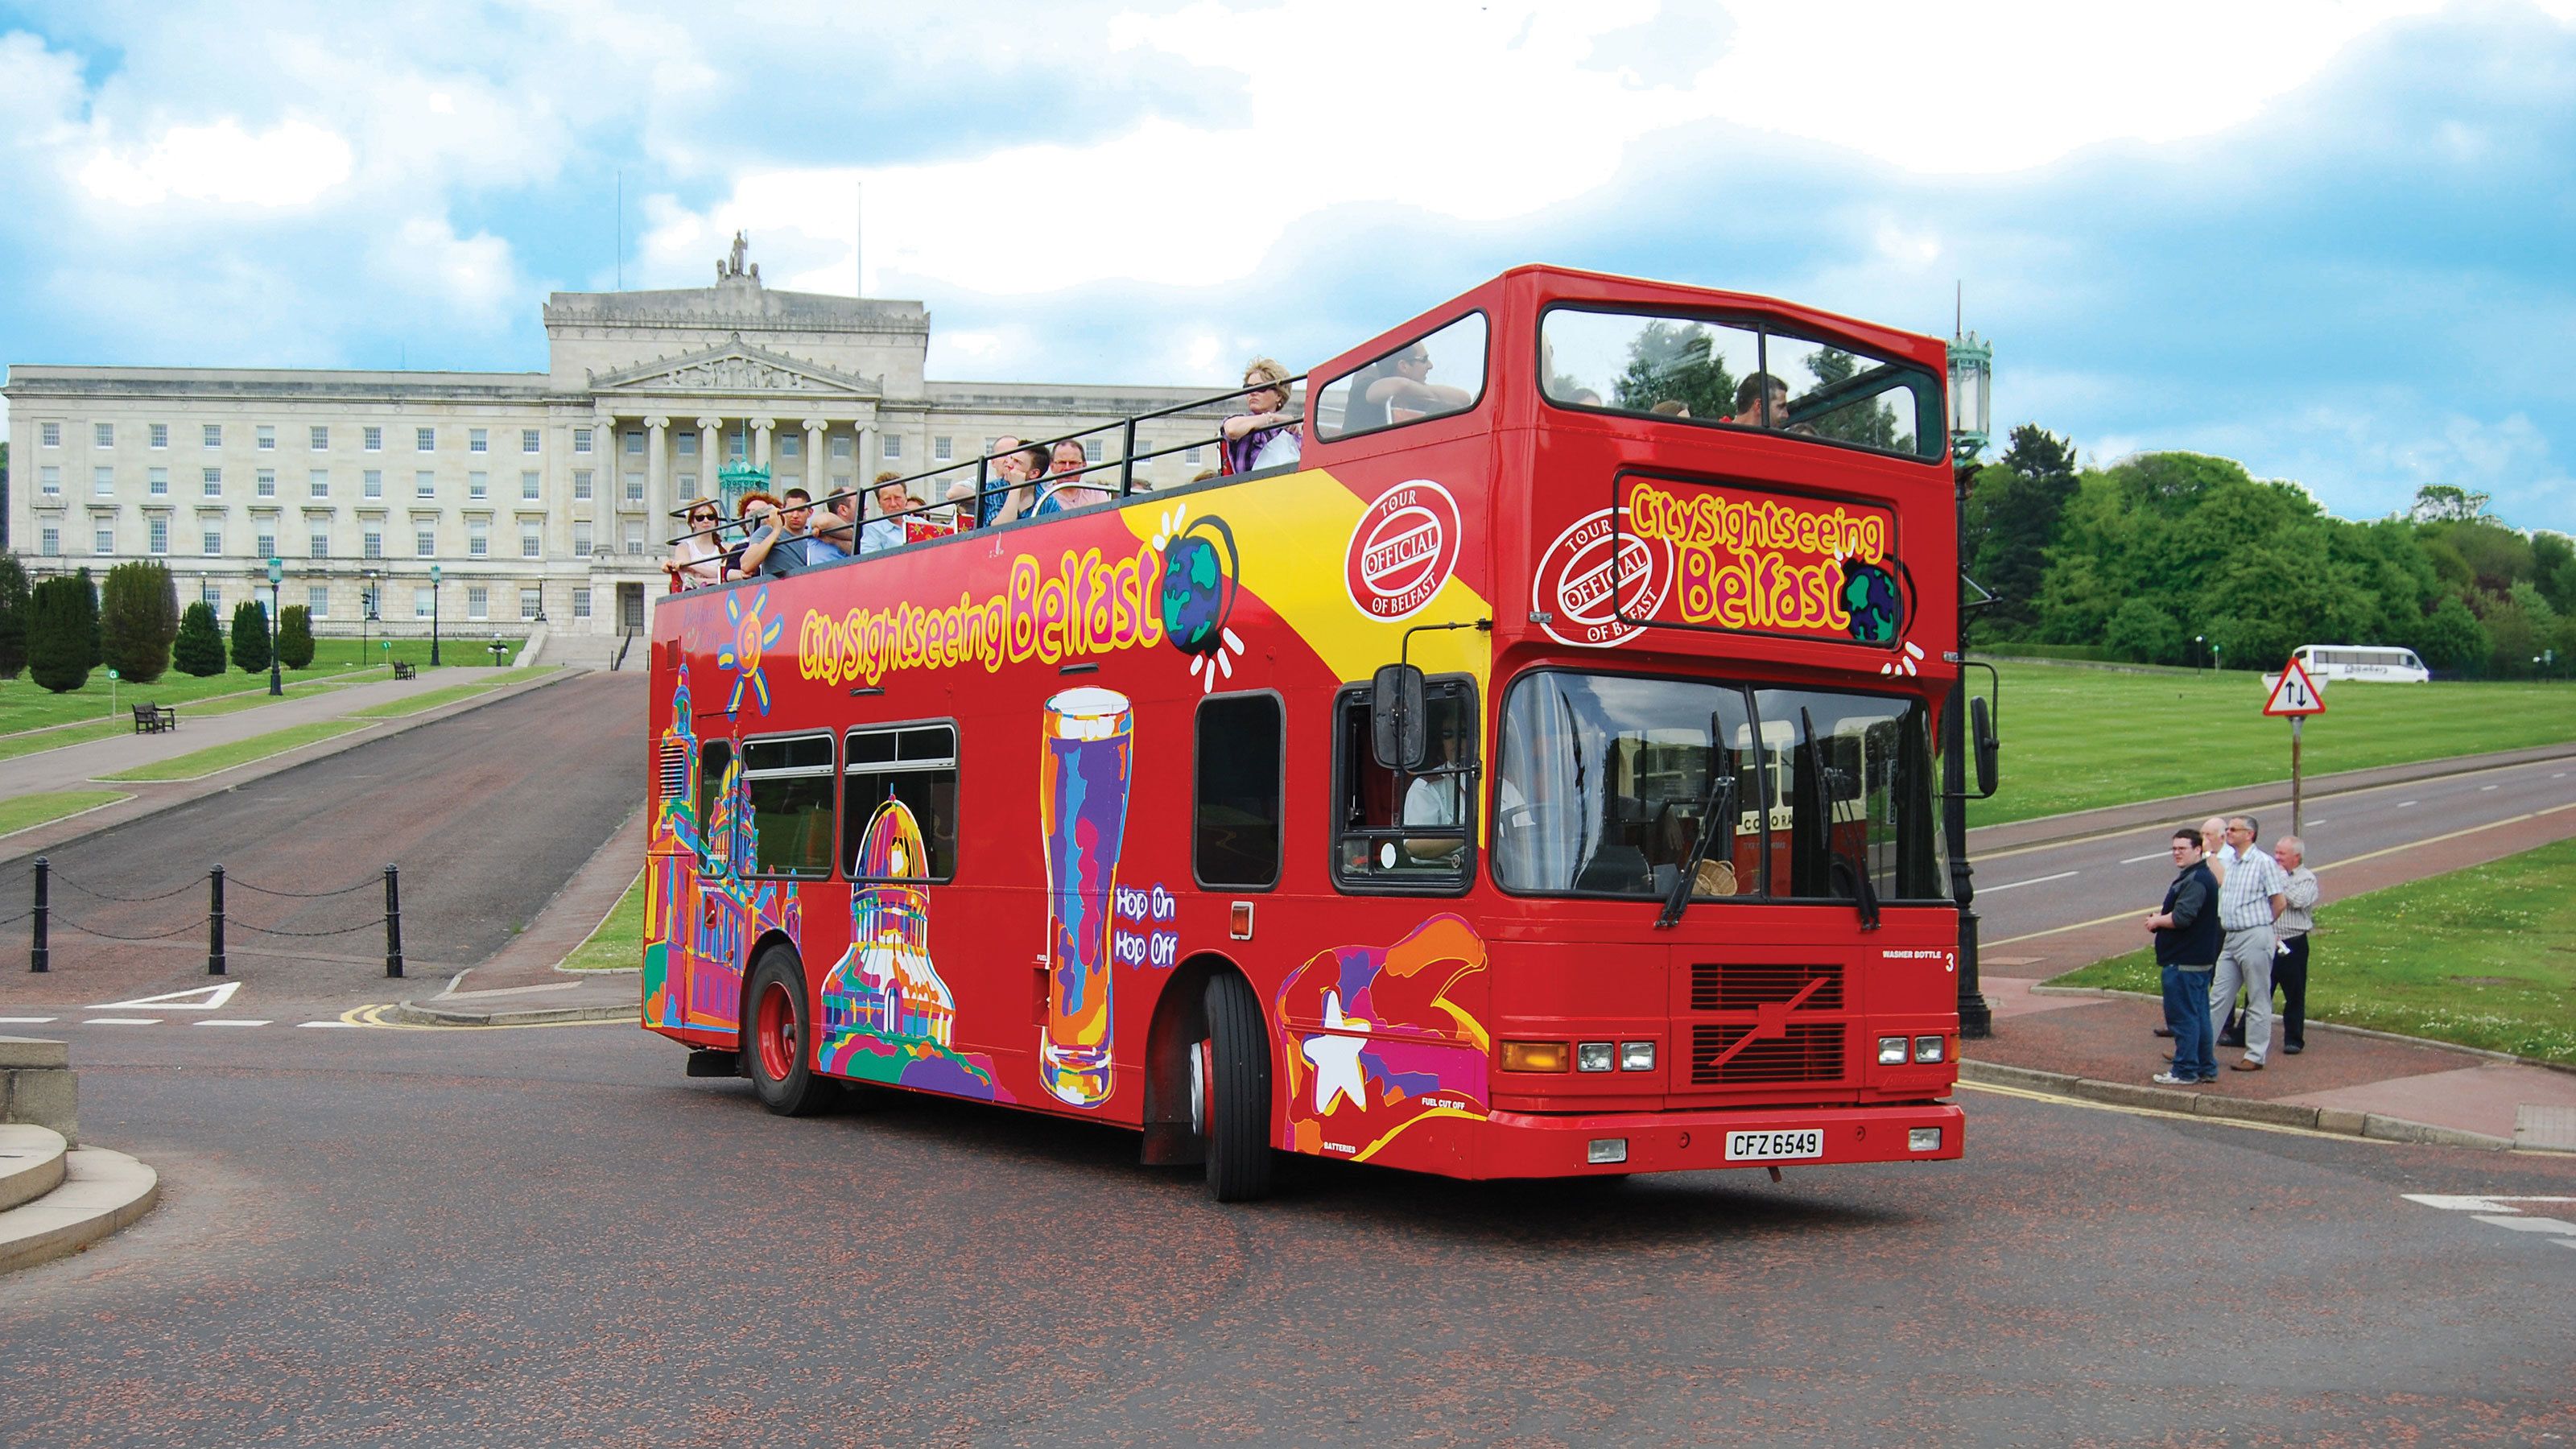 belfast big bus tour